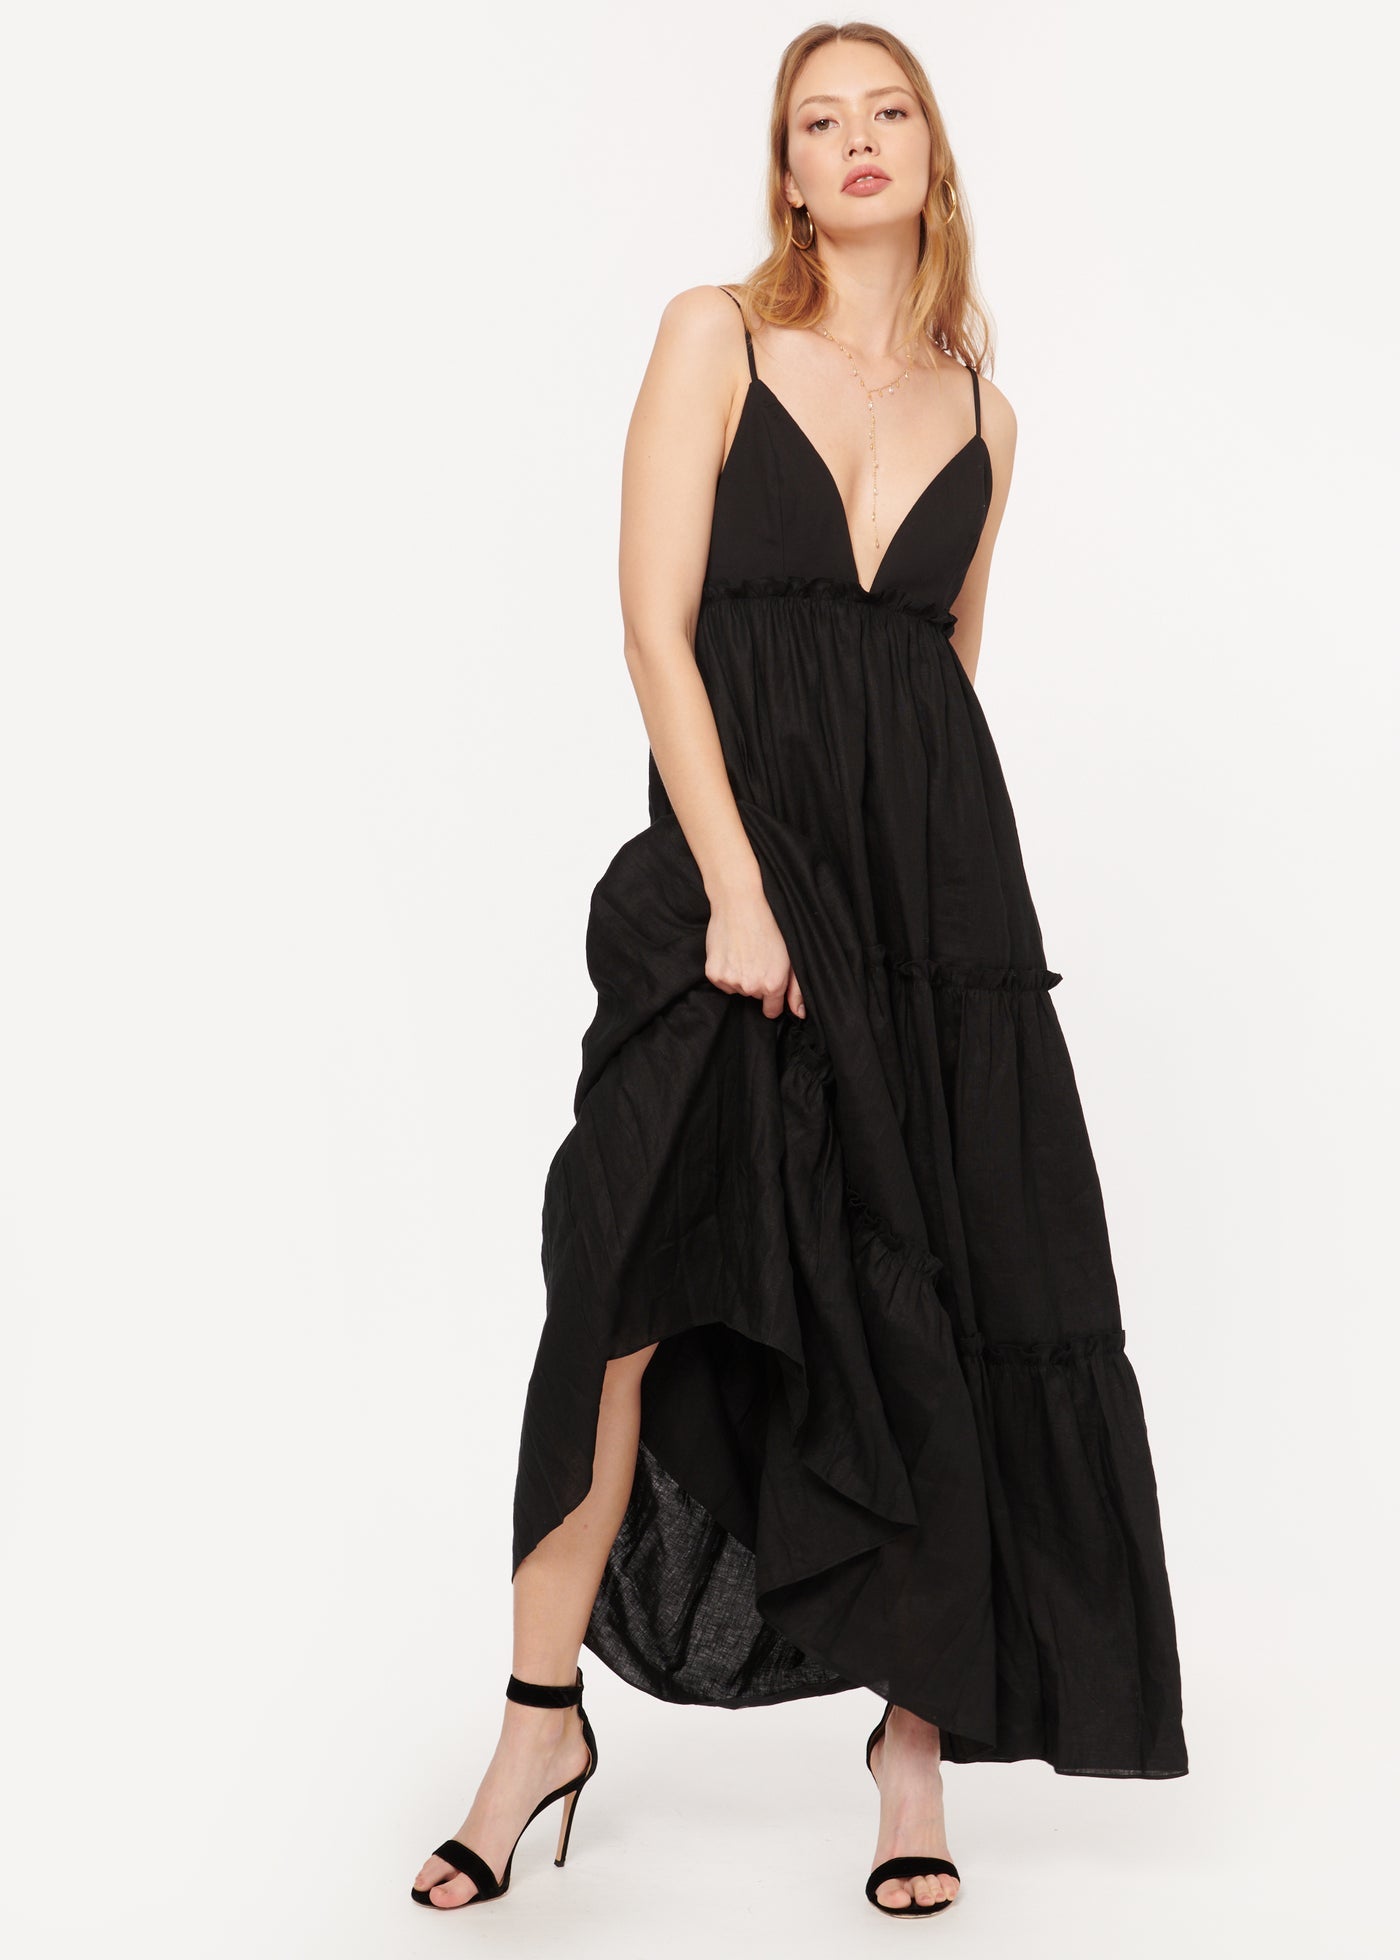 Cass Luxury Shapewear, Cami Dress Black